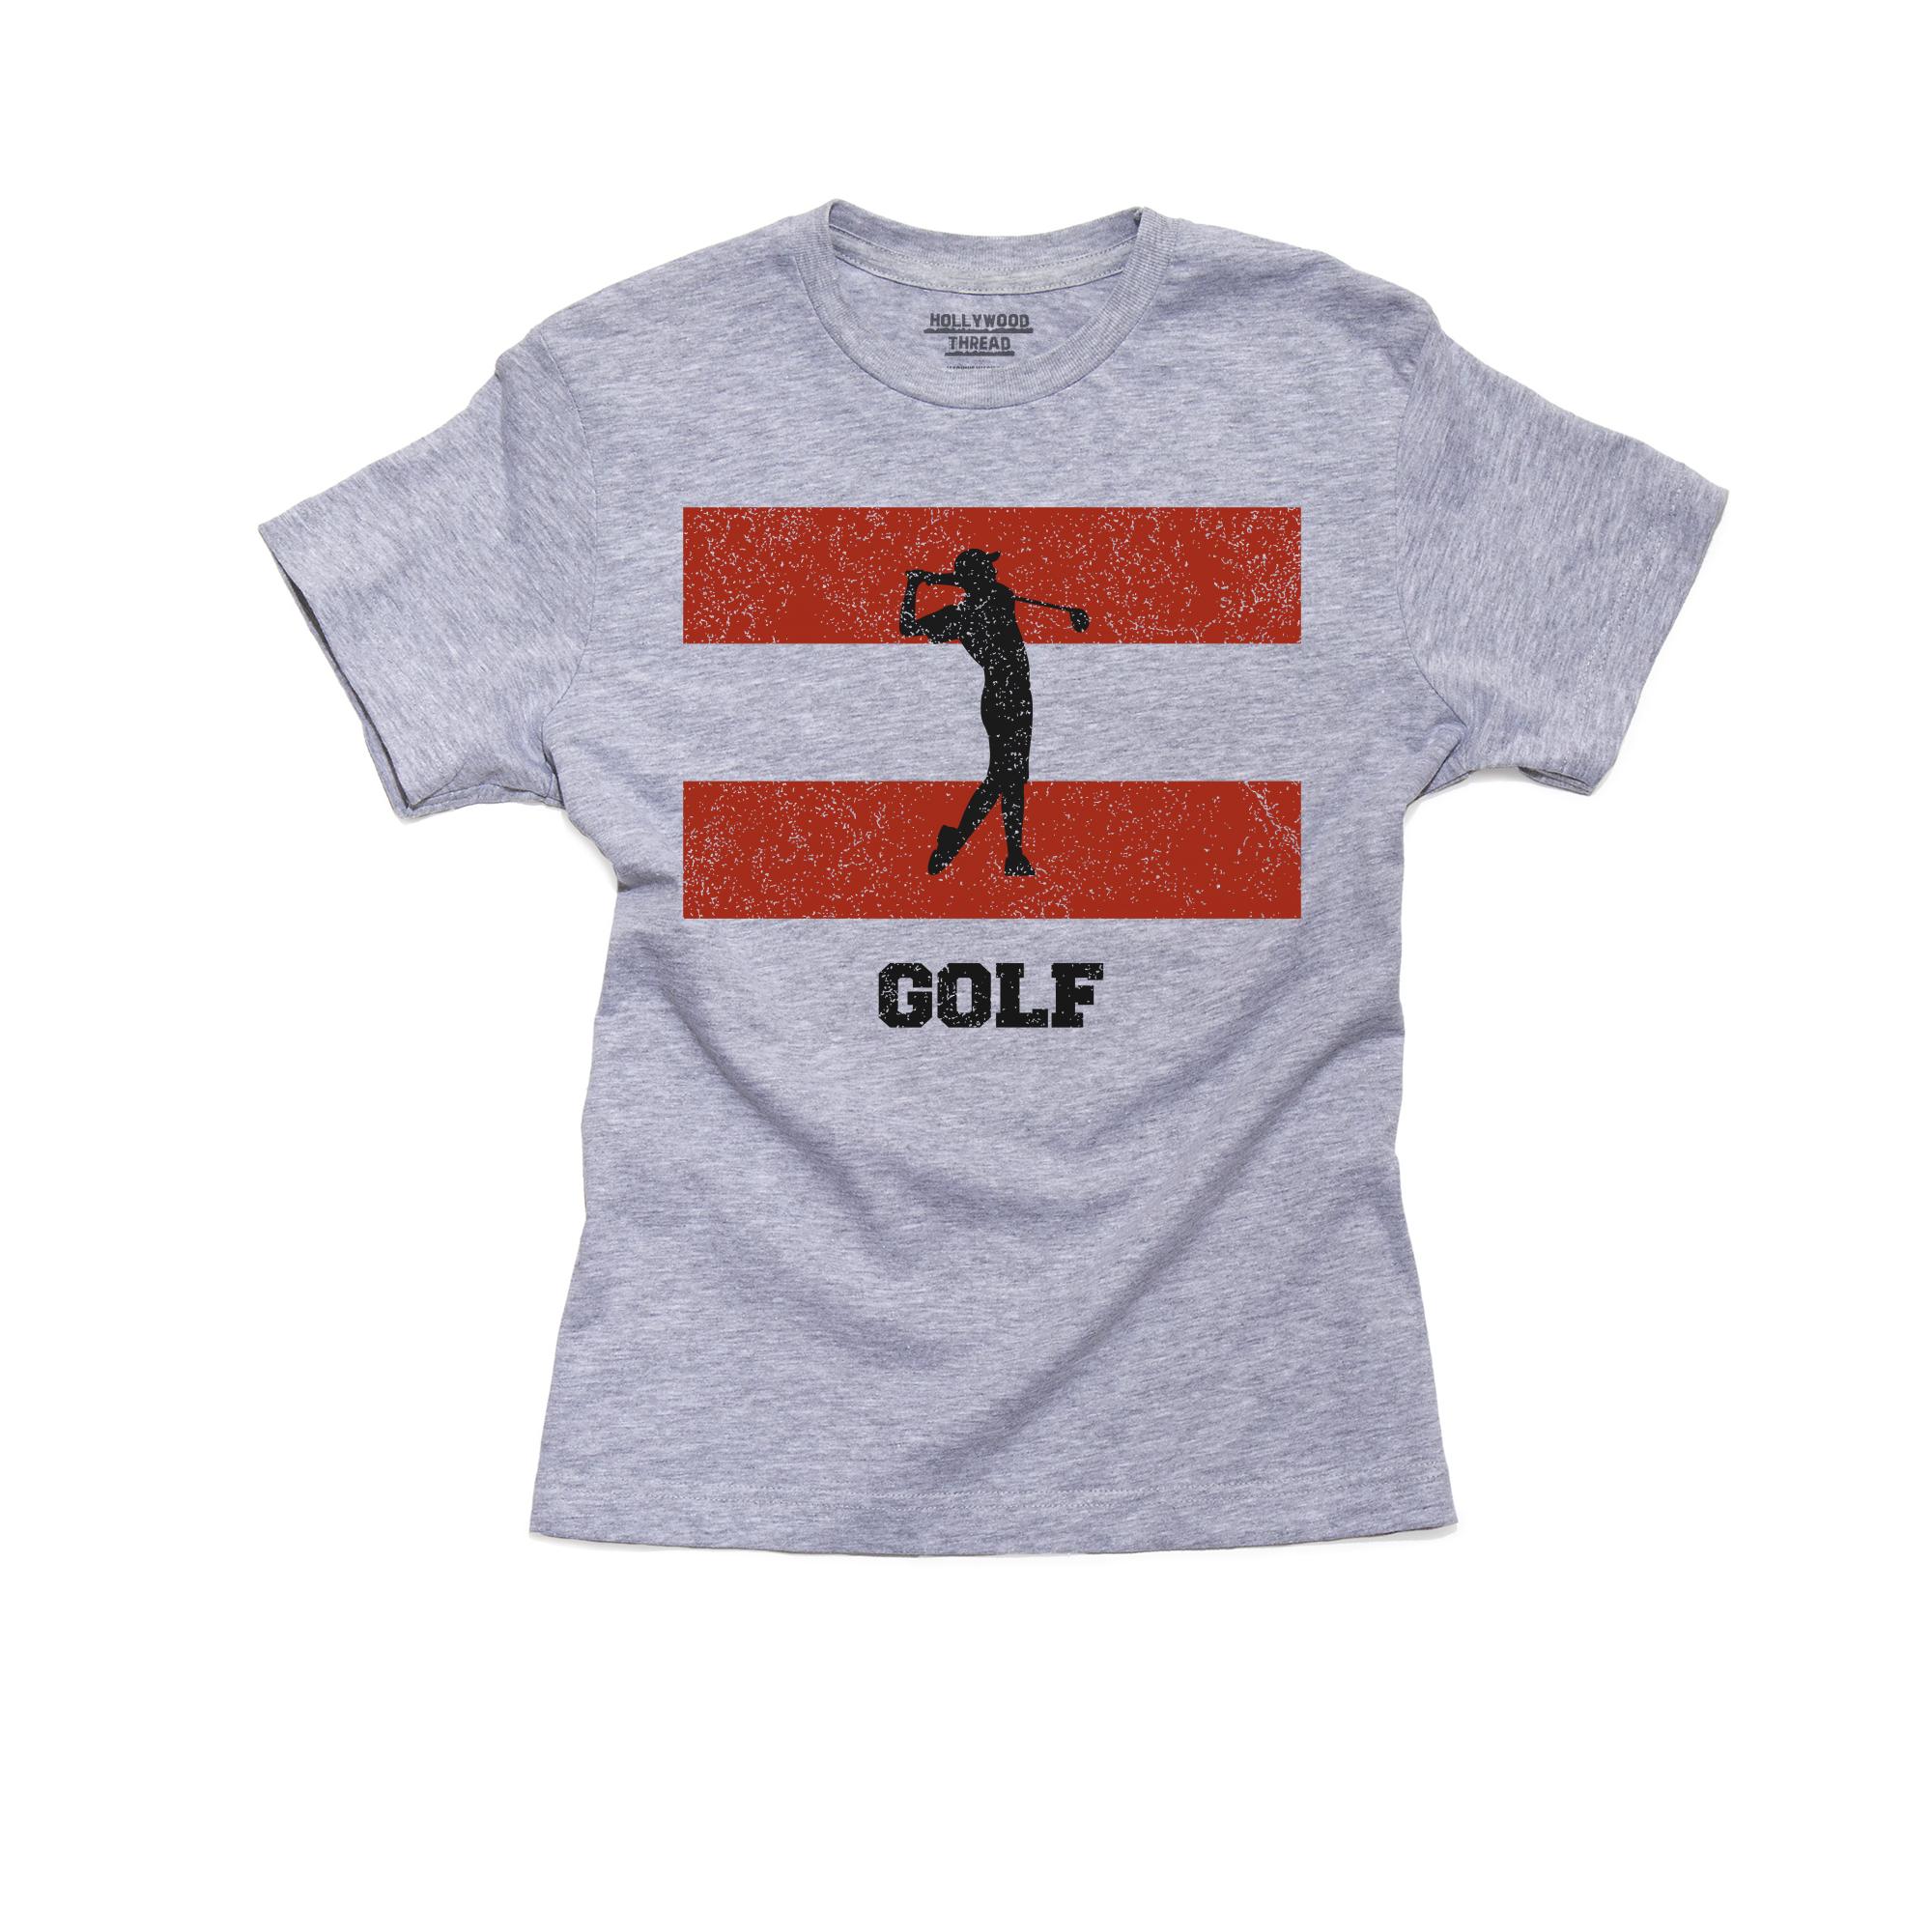 Austria Olympic - Golf - Flag - Silhouette Boy's Cotton Youth Grey T ...